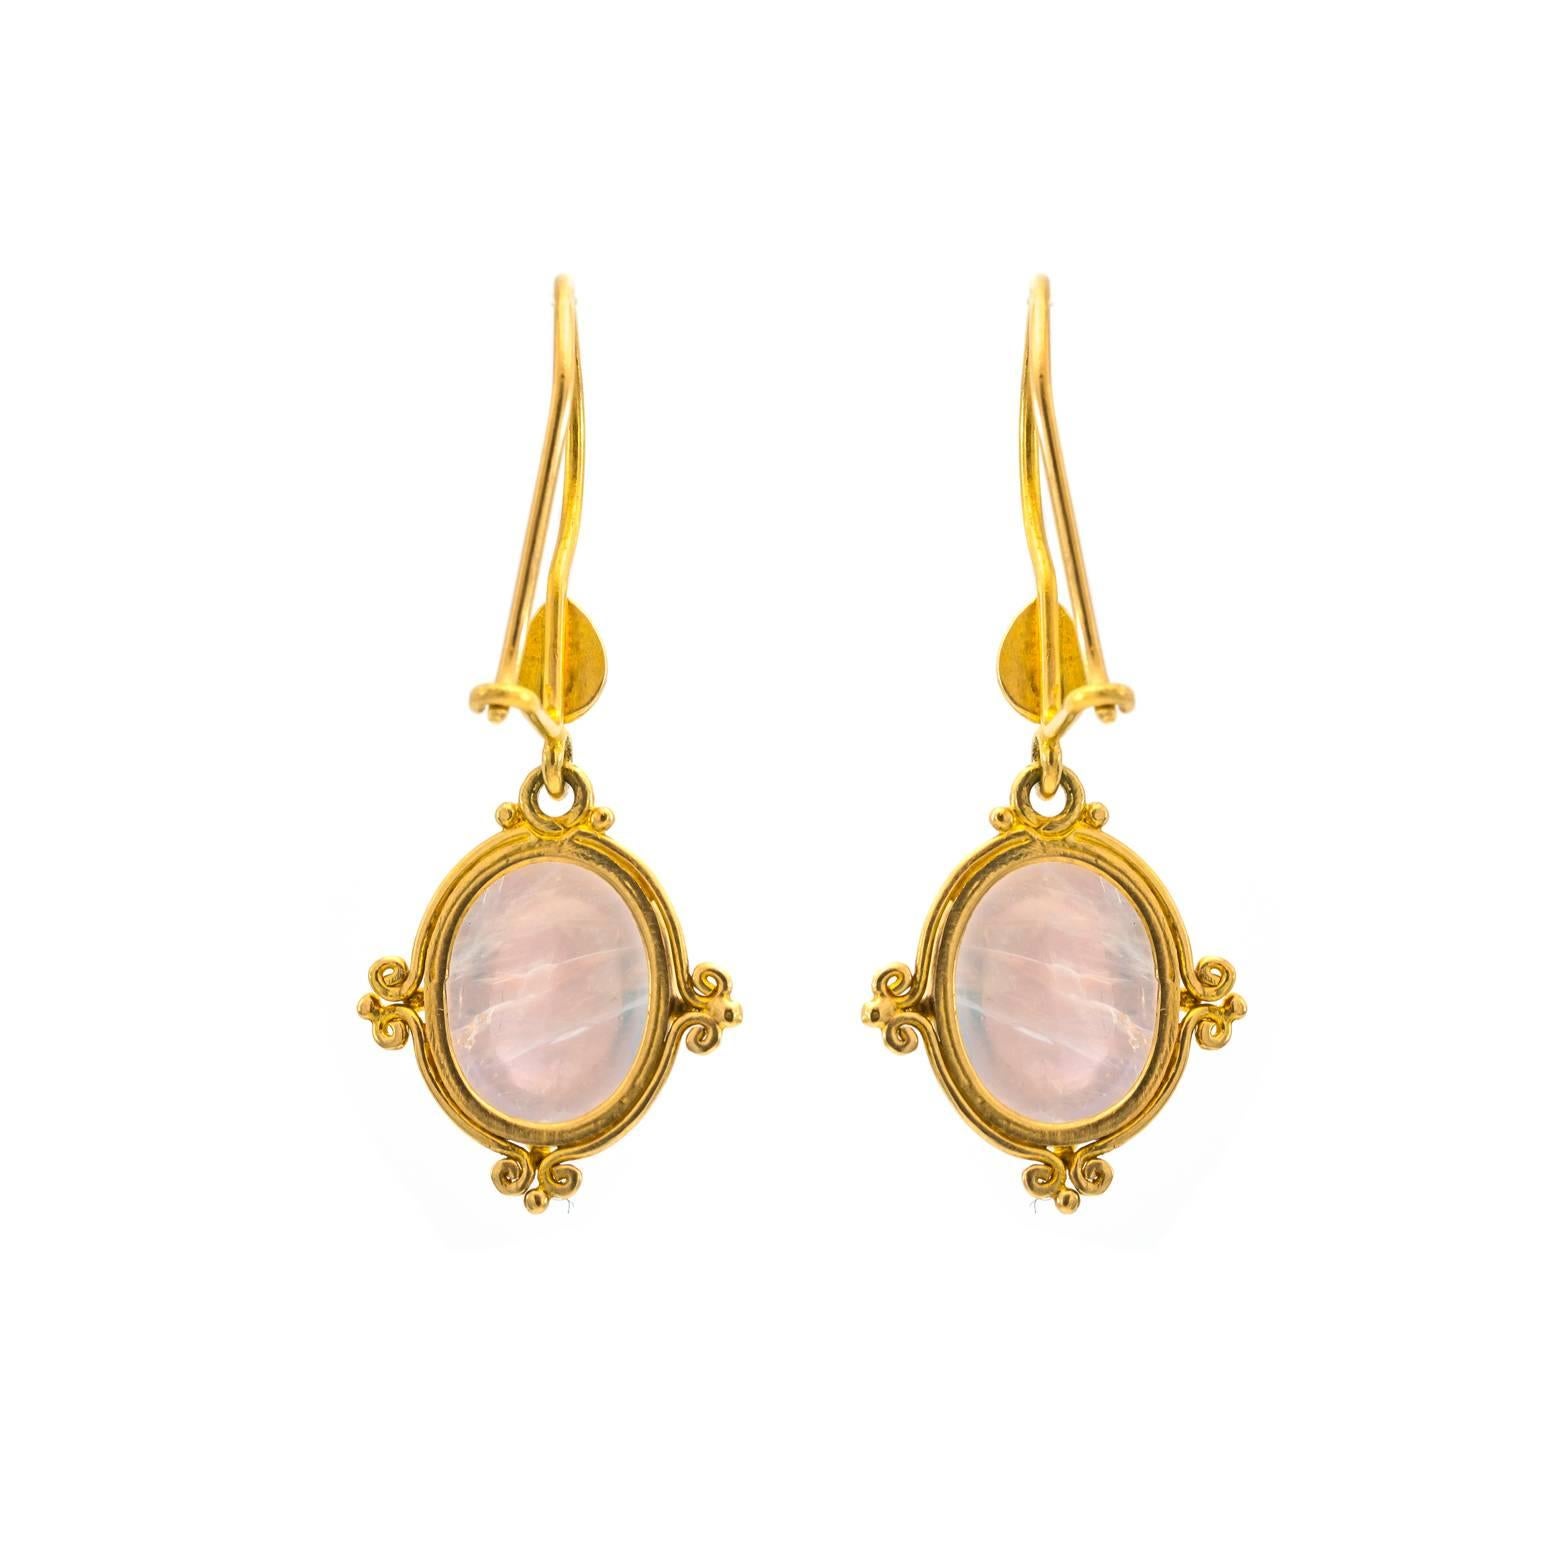 Romantic Moonstone Drop Earrings Set in 18 Karat Gold